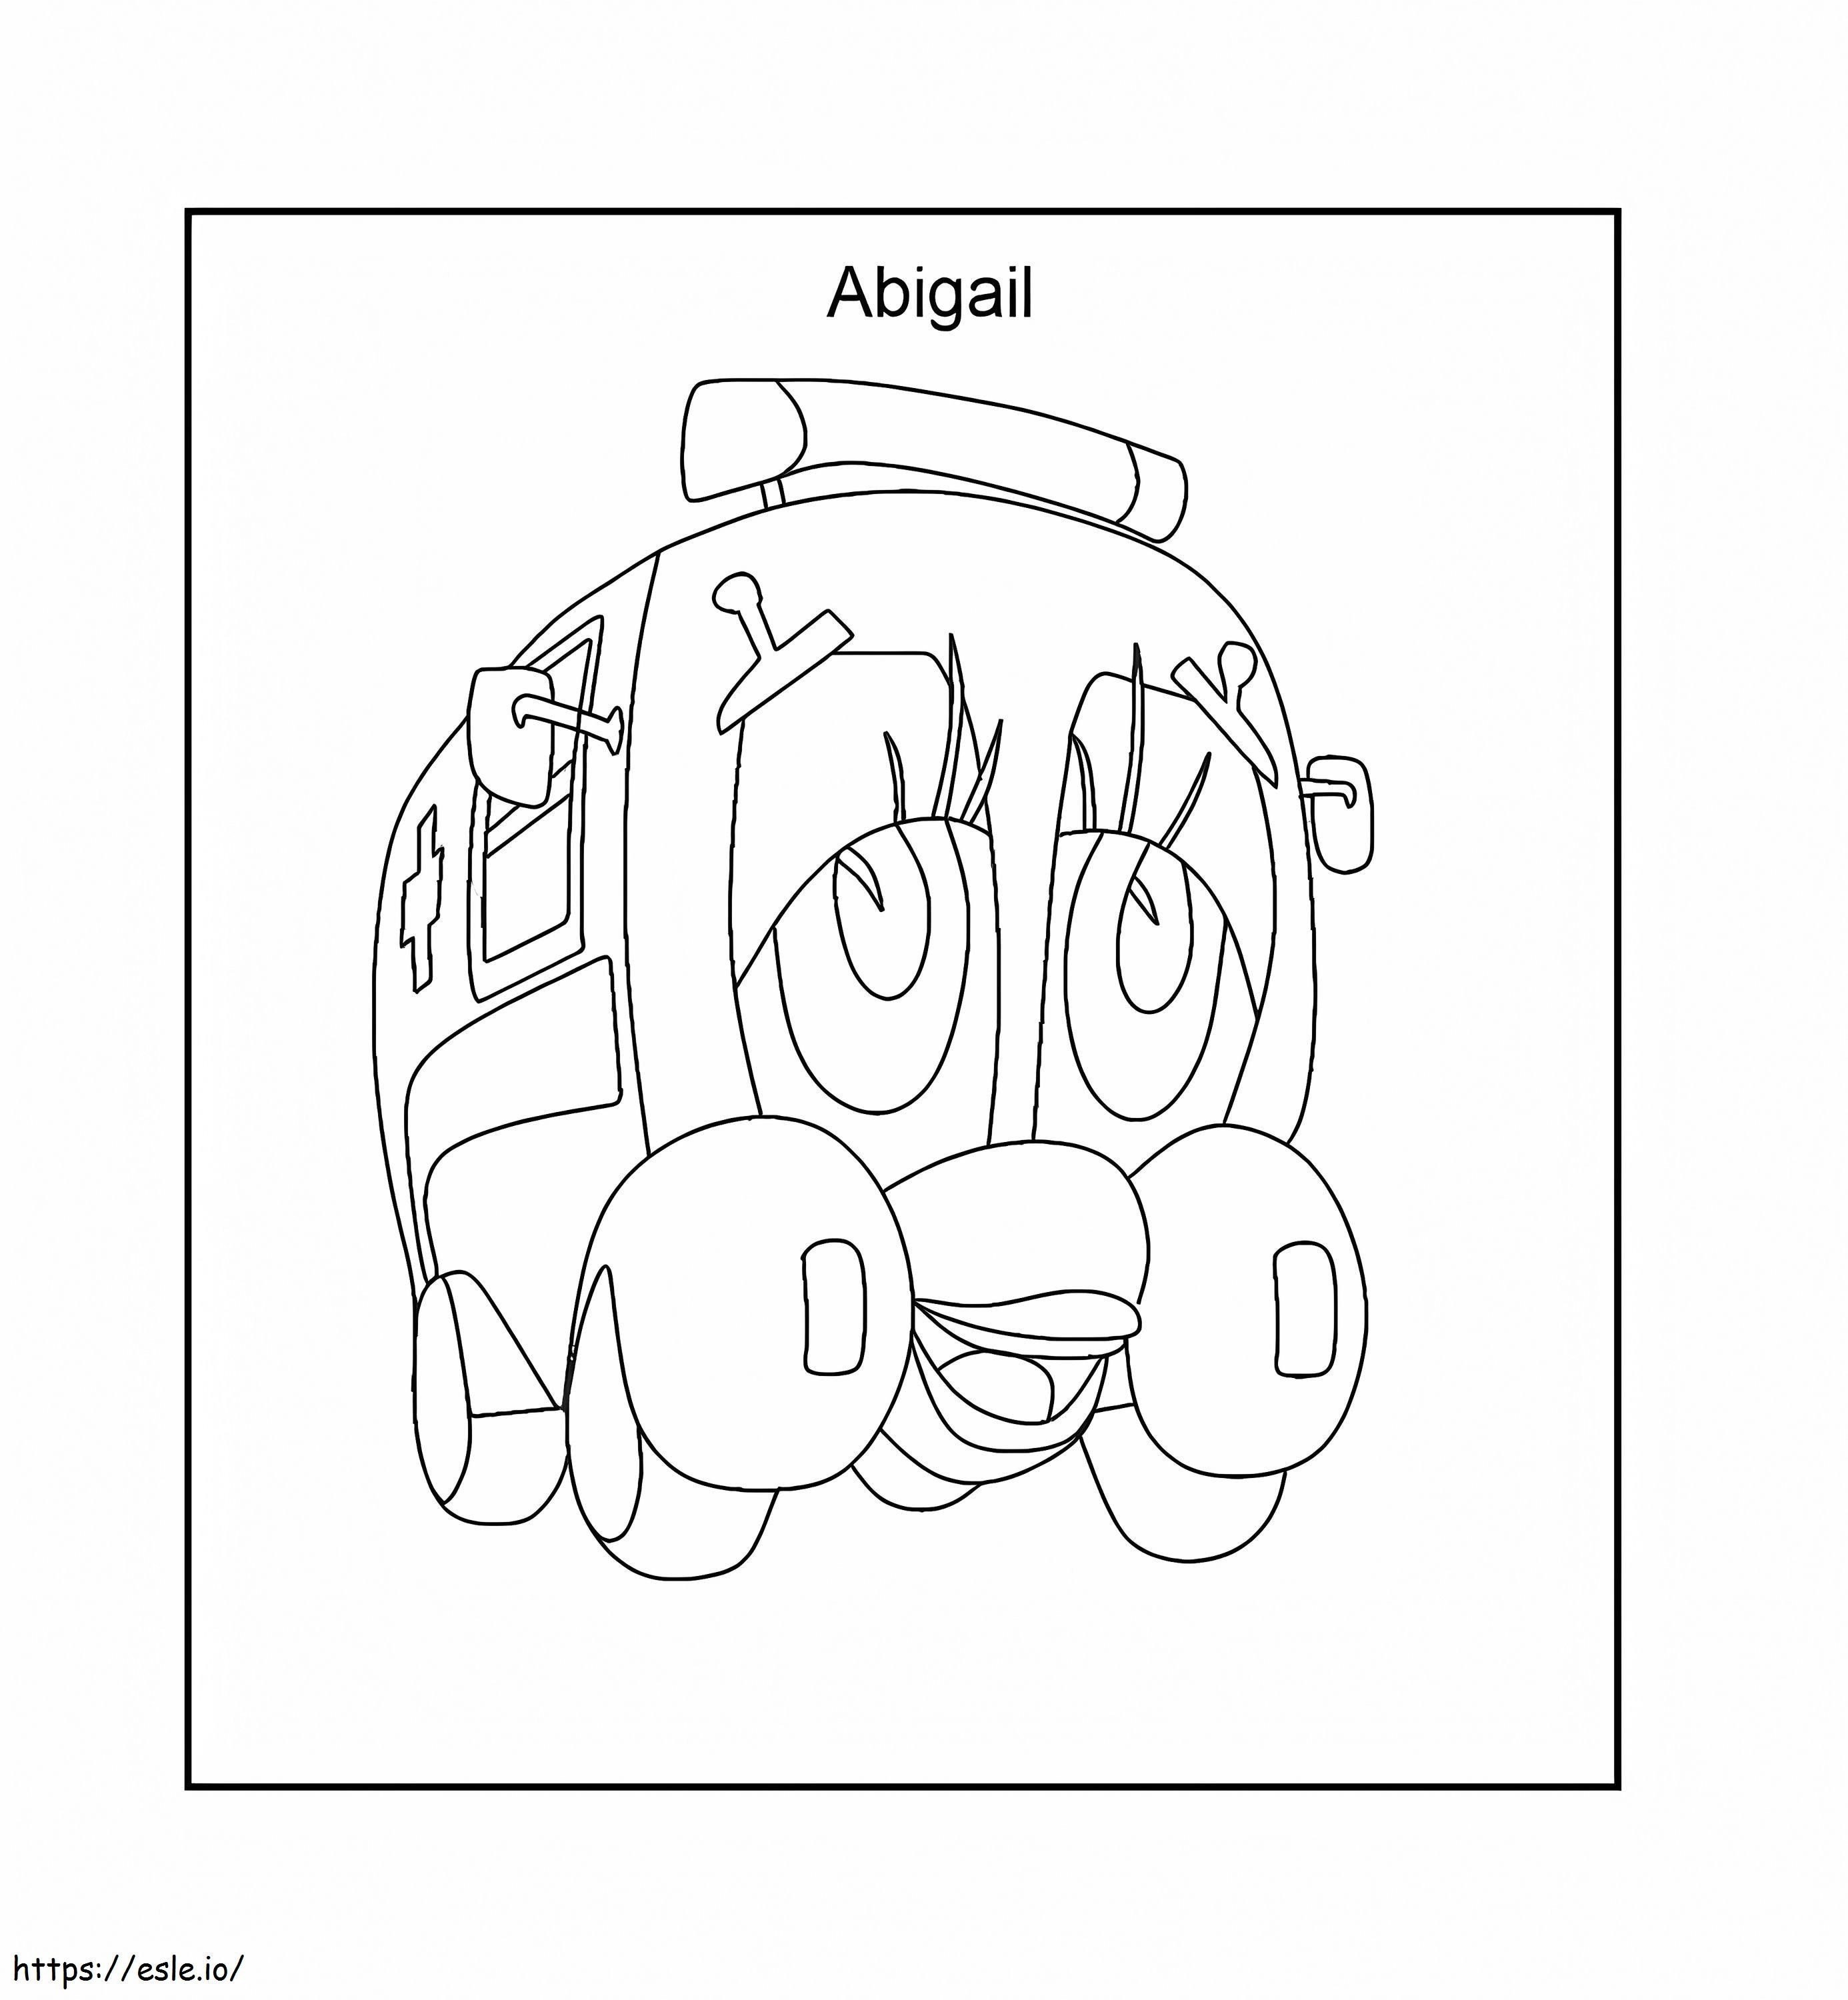 Ambulancia Abigail para colorear